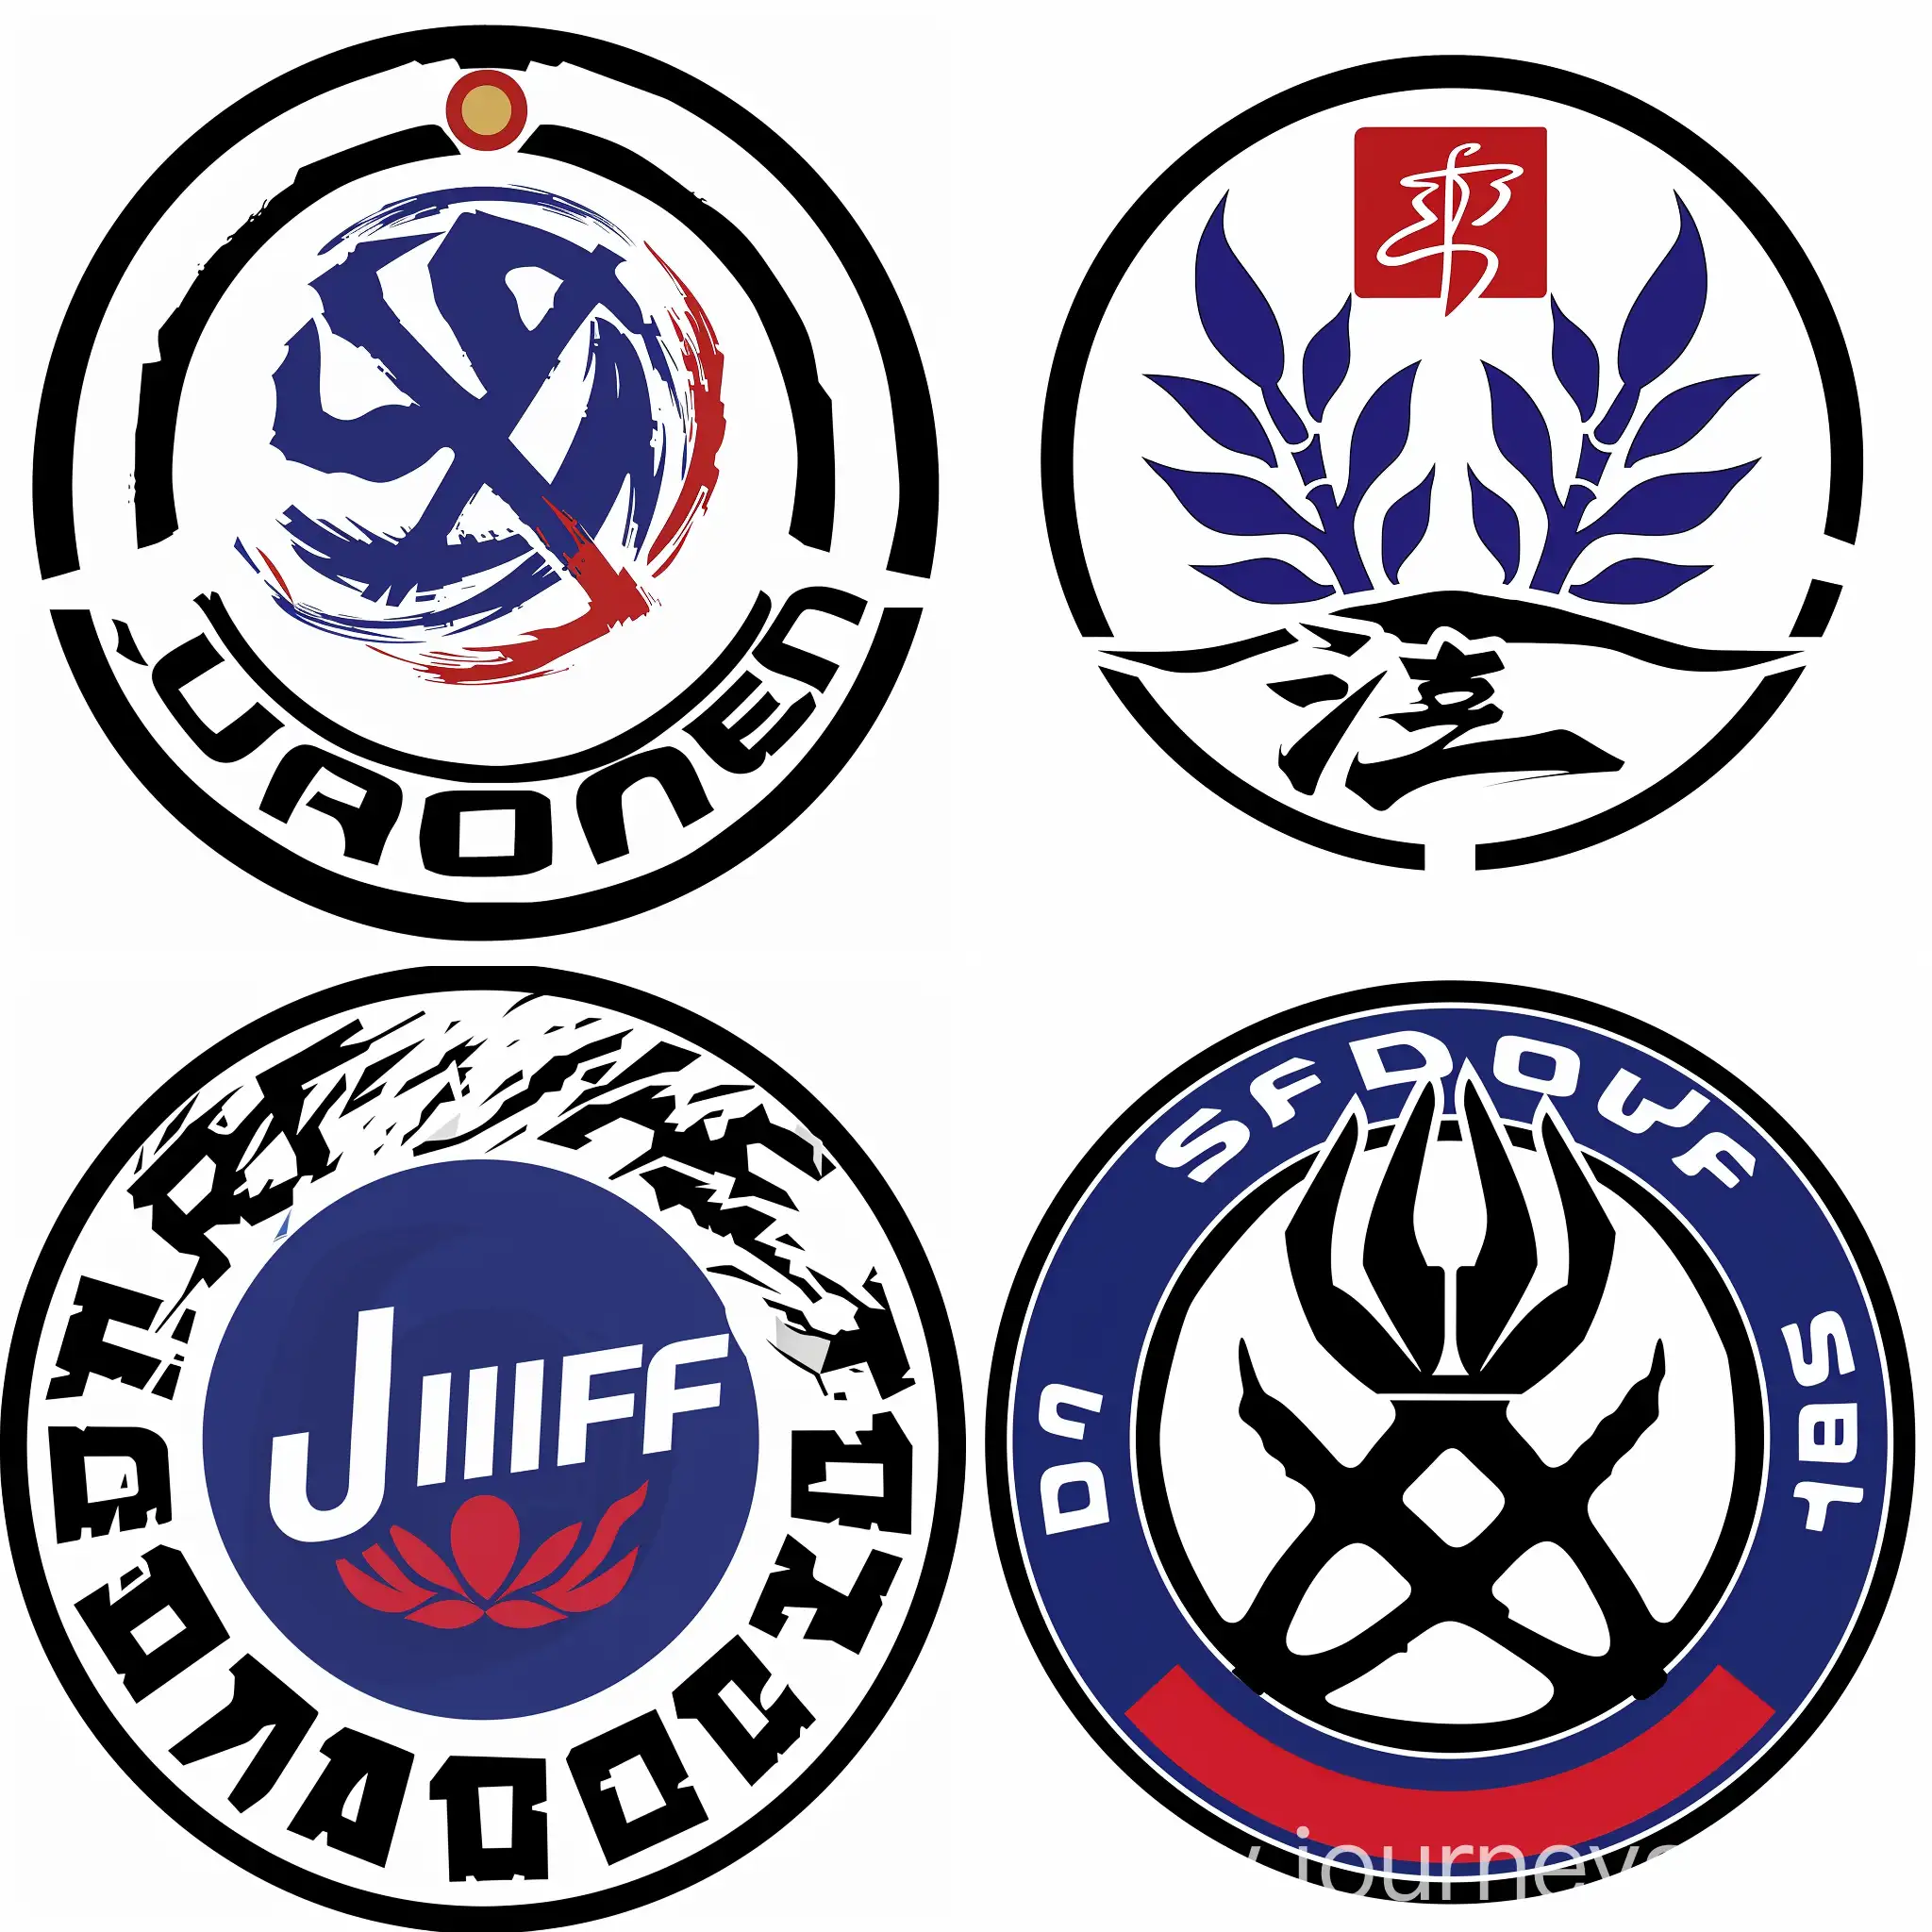 логотип черно-белый Judo sref https://sun9-46.userapi.com/impf/c844720/v844720992/ccb24/eIjxq24cGwQ.jpg?size=960x960&quality=96&sign=732798cec072b3029a28896dc64a99b1&c_uniq_tag=Ux1FfU73dHq560oPmor7YO_4lDf7a-rGuMsCDZaCvQk&type=album